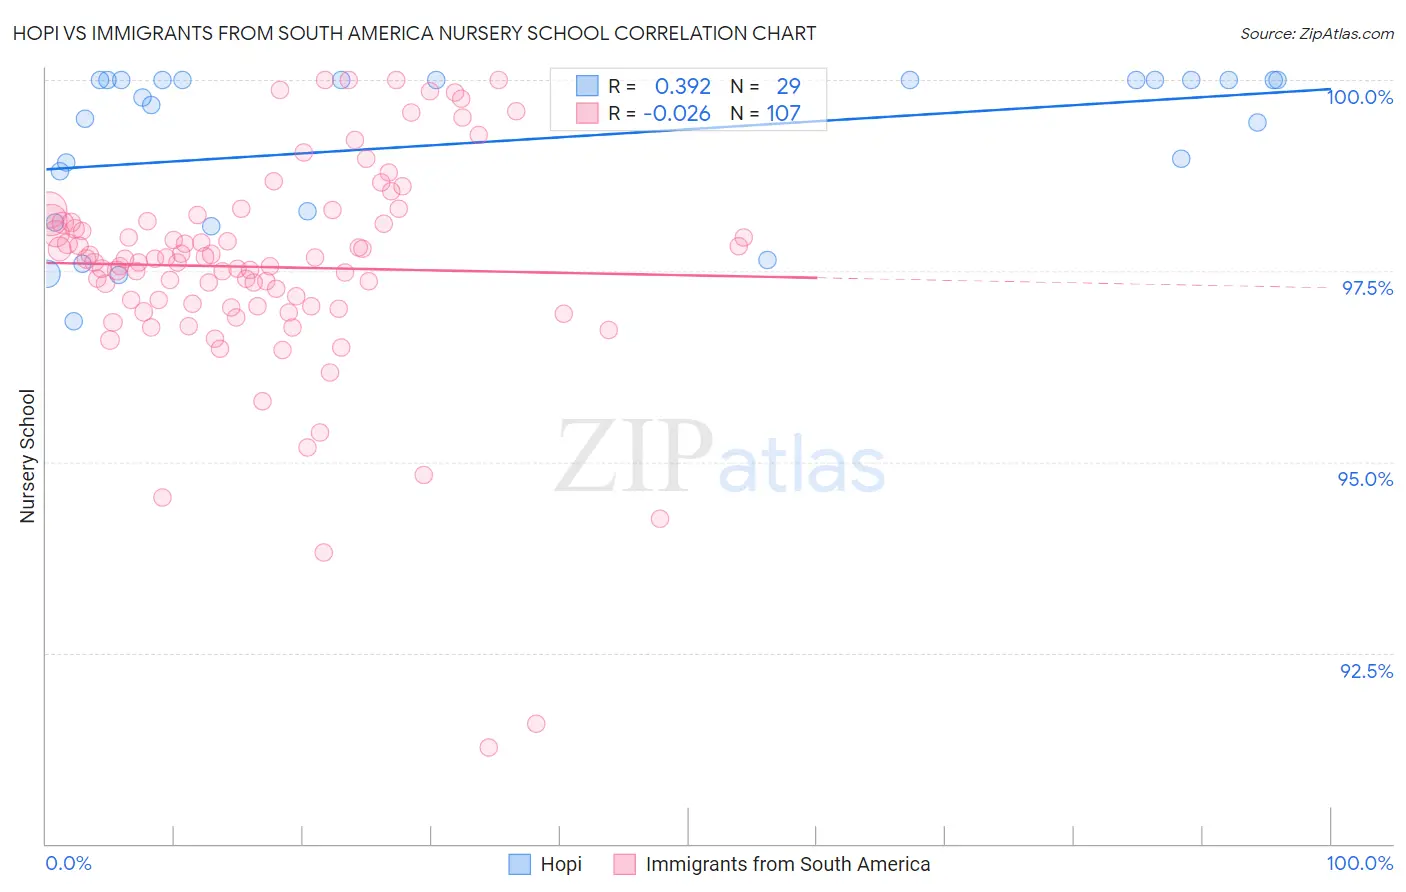 Hopi vs Immigrants from South America Nursery School